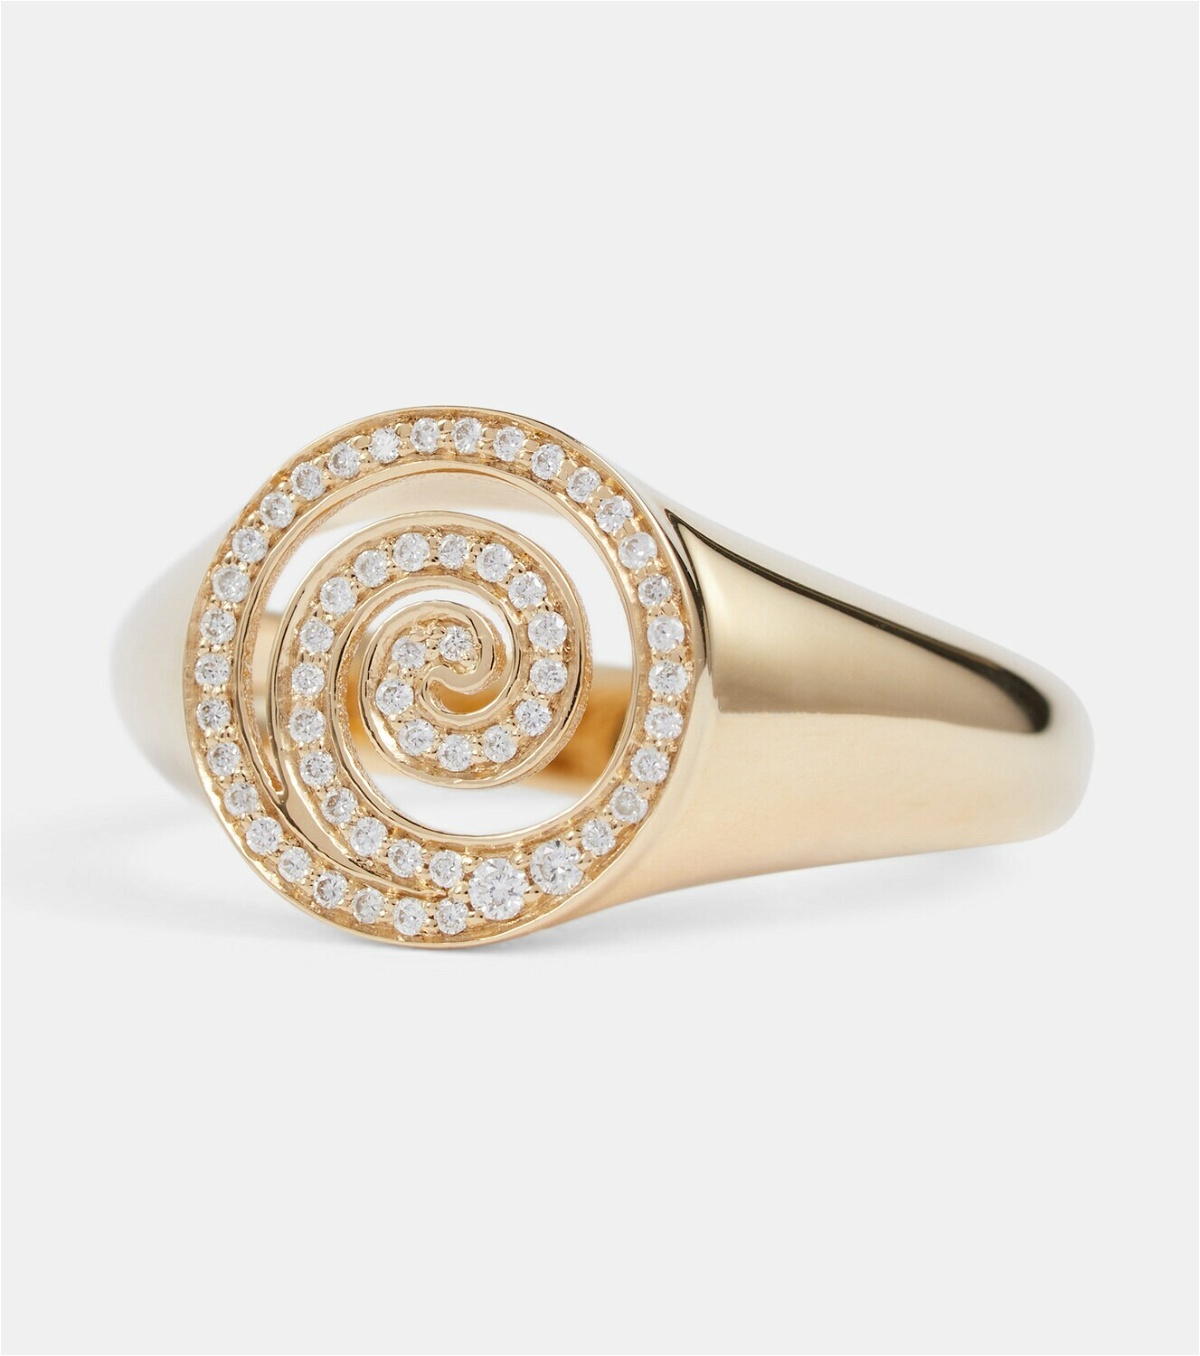 Sydney Evan Nautilus Spiral 14kt gold signet ring with white diamonds